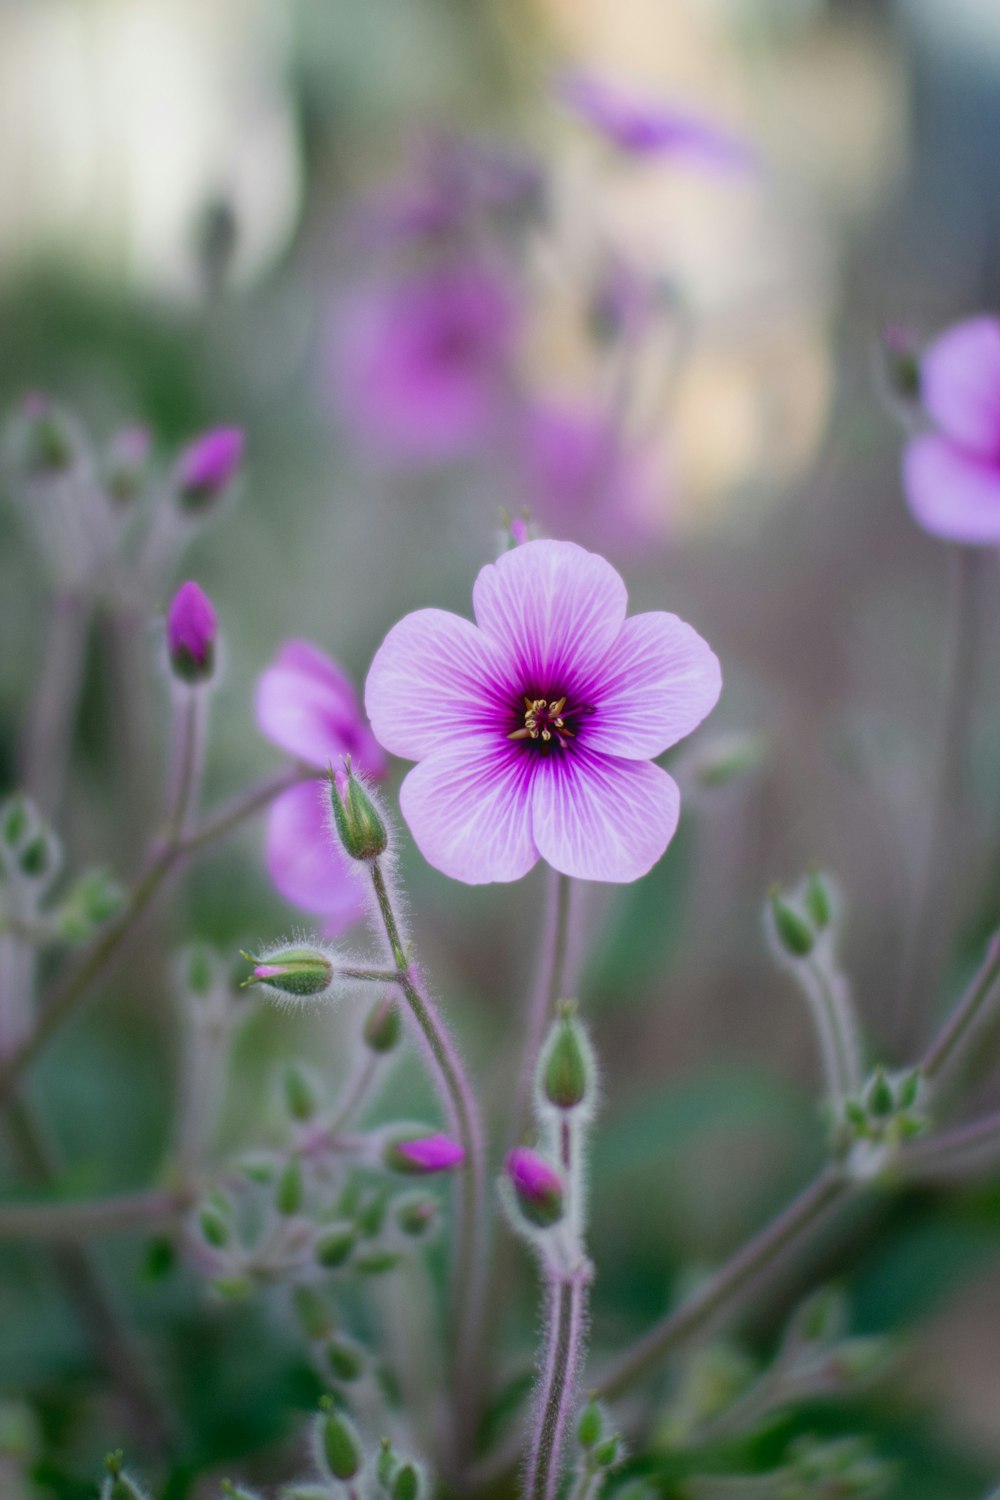 fiore viola con lente tilt shift